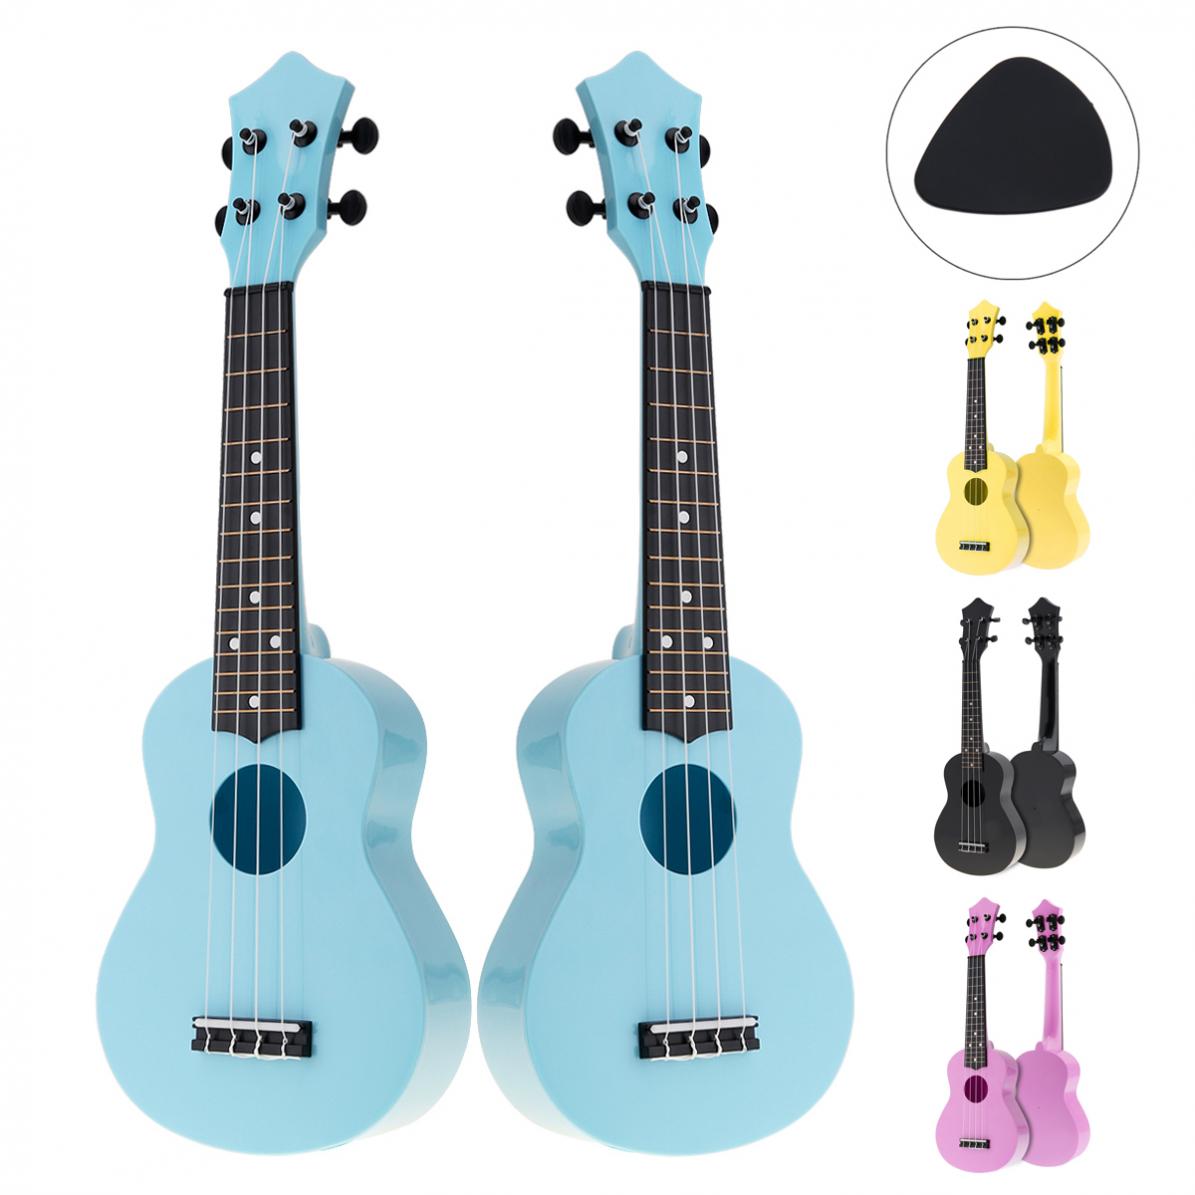 Plastic 21 Inch Soprano Colorful Acoustic Ukulele Uke 4 Strings Hawaii Guitar Guitarra Instrument for Kids and Music Beginner